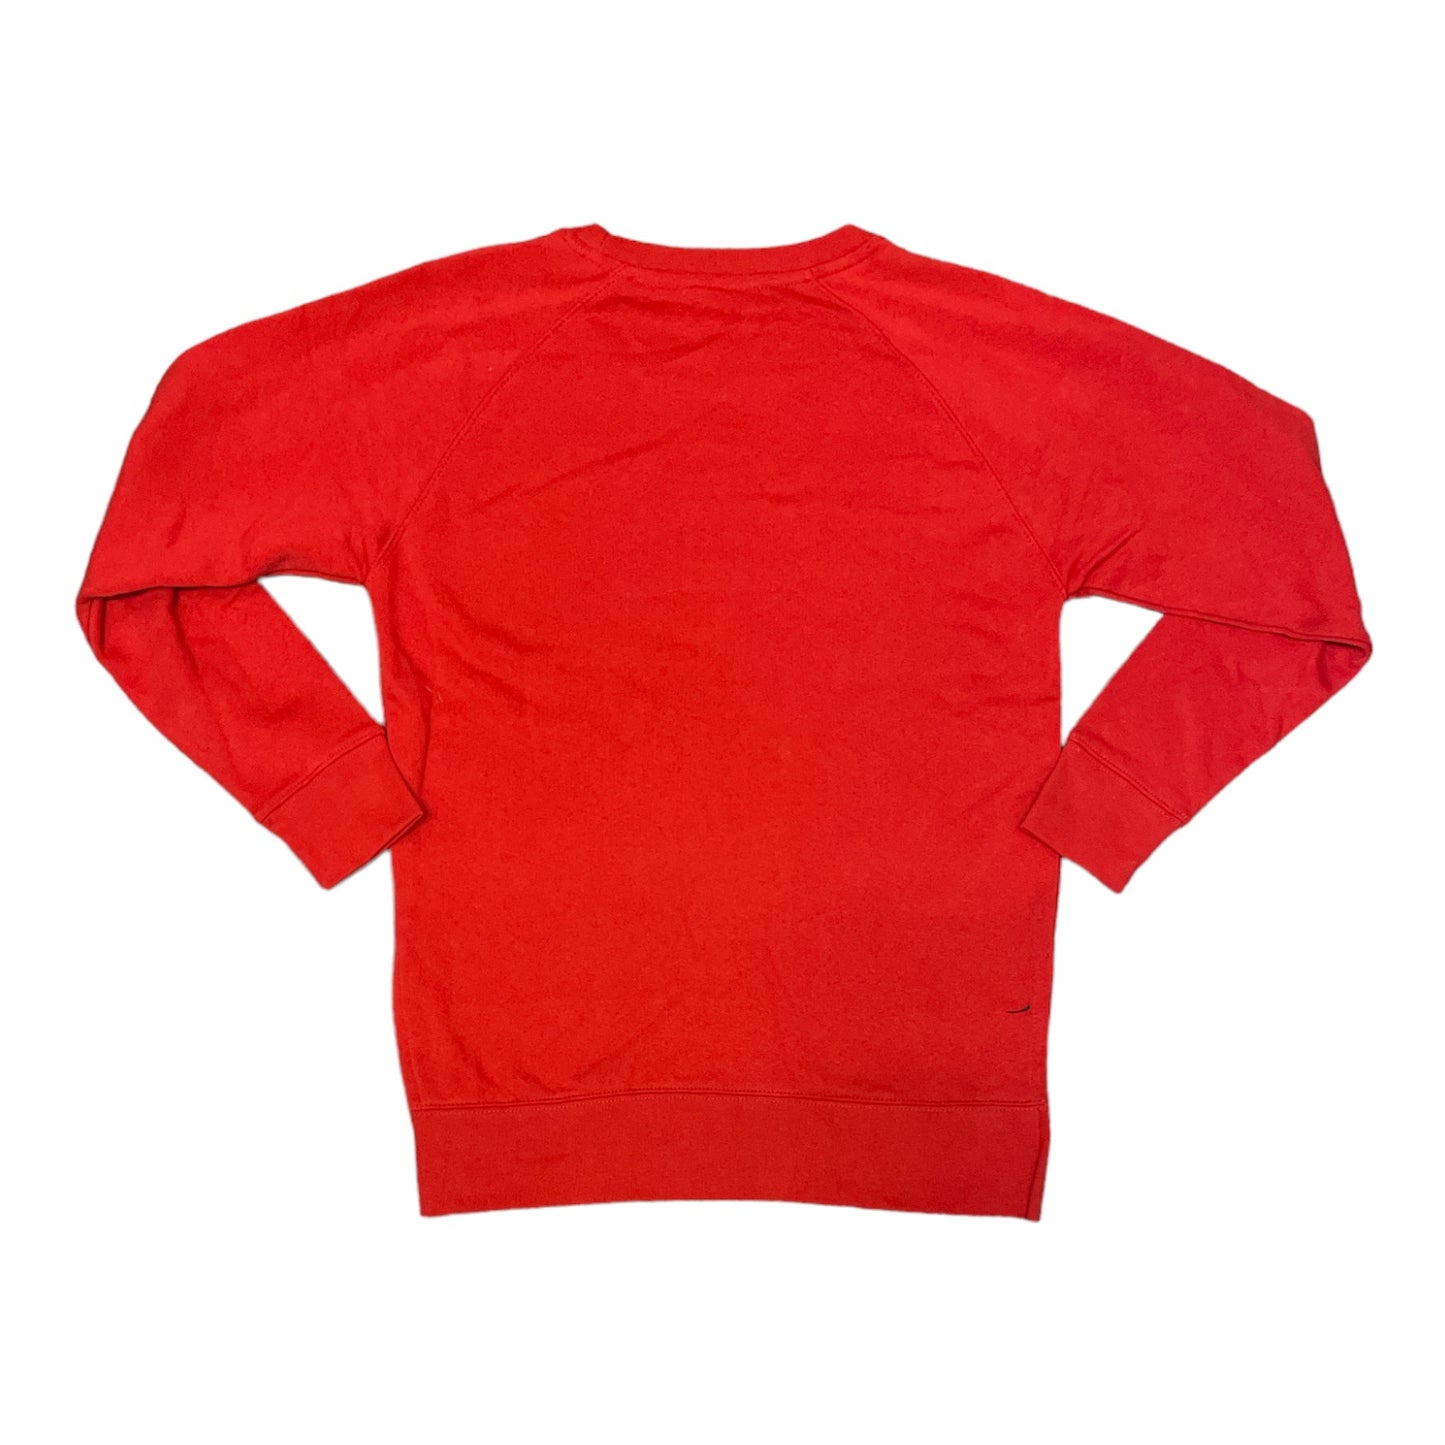 Royce Brand Women's Super Soft Holiday Themed Long Sleeve Sweatshirt